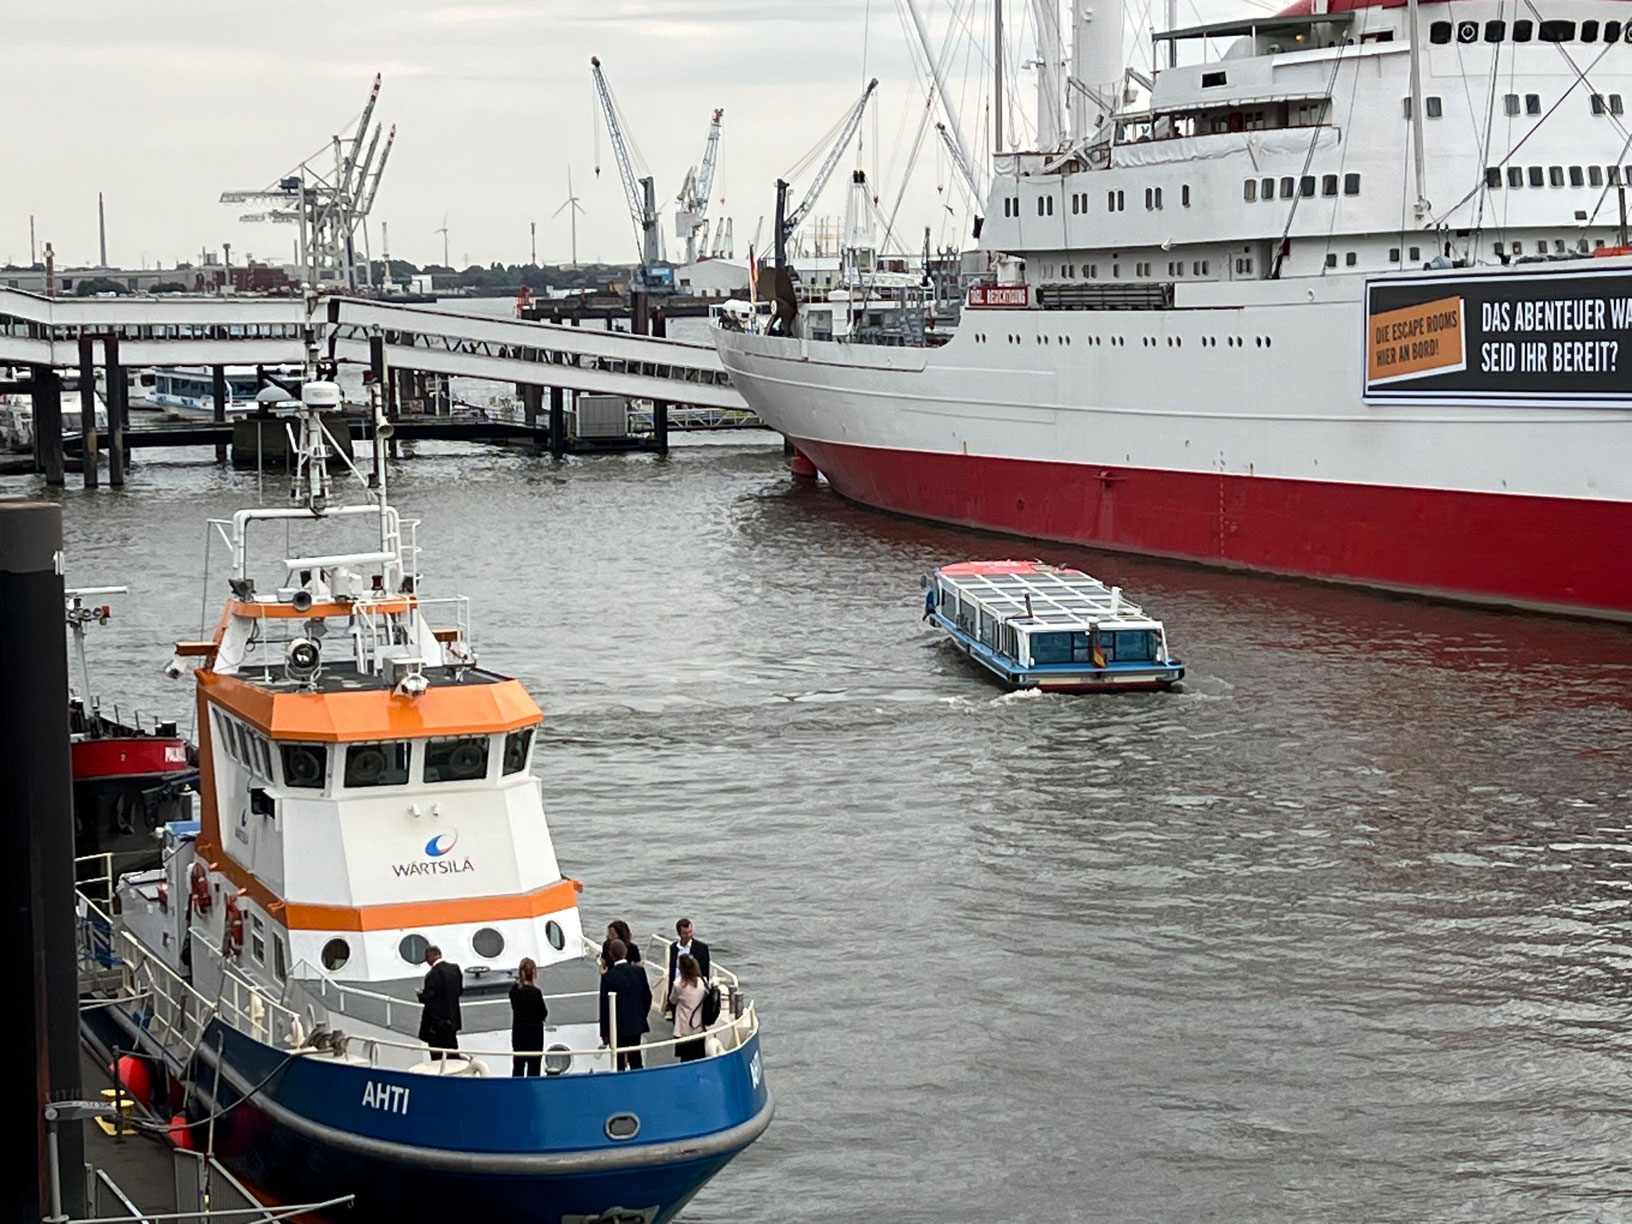 AHTI docked in Hamburg, next to the MS Cap San Diego.